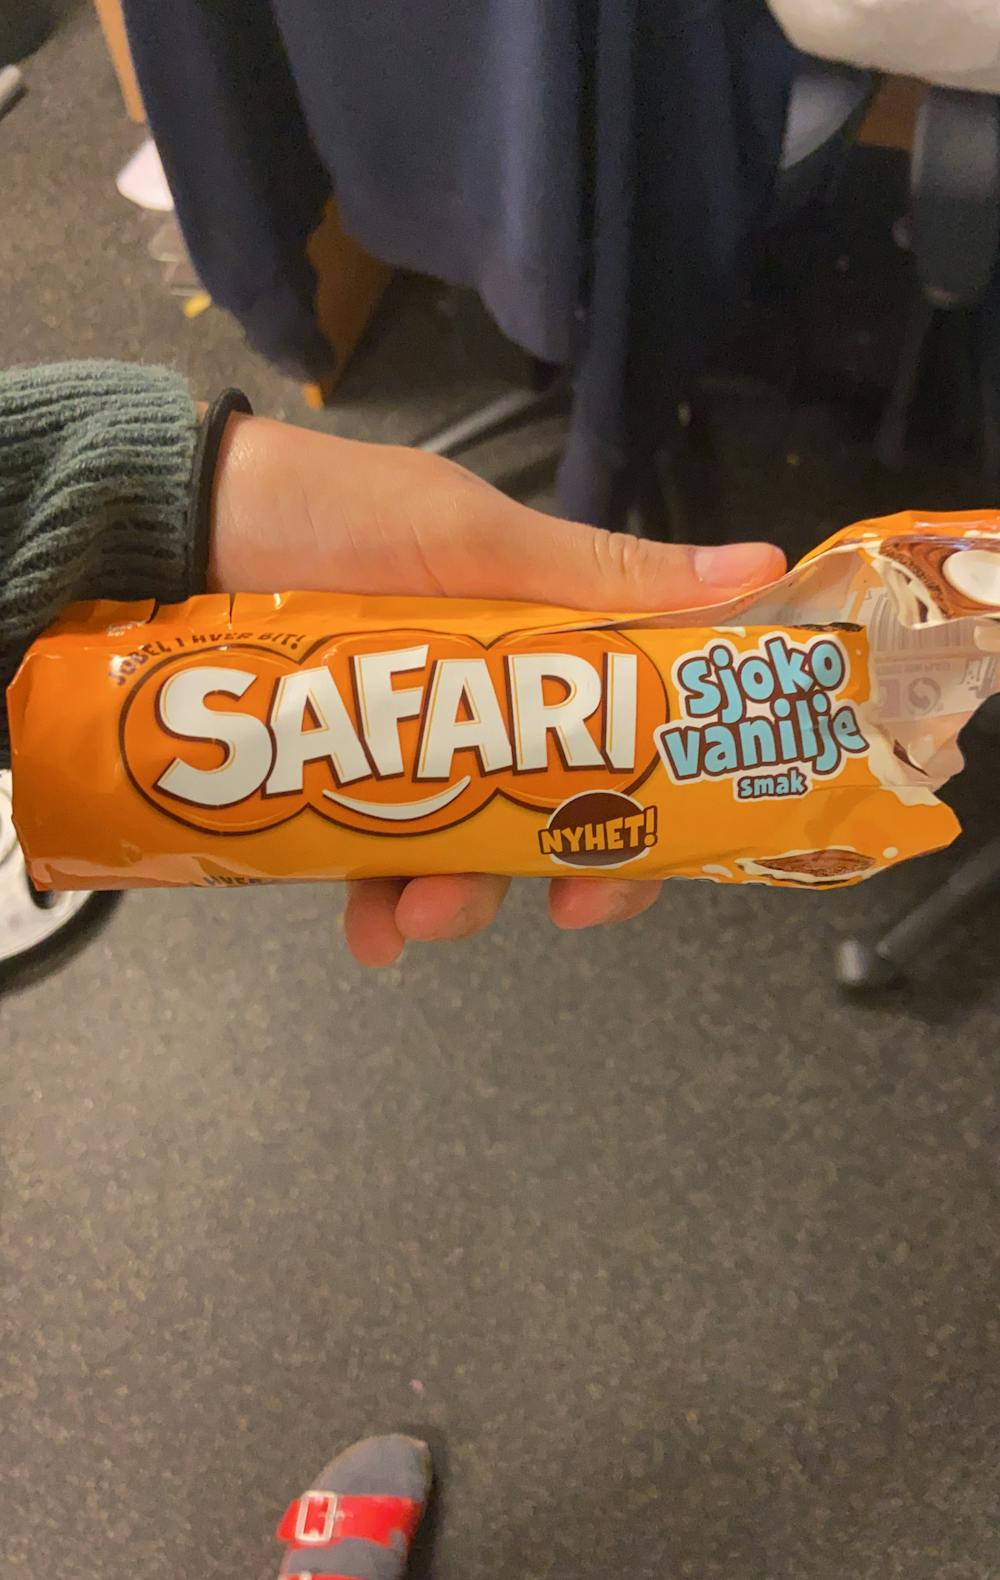 Safari, sjoko vanilje smak, Sætre